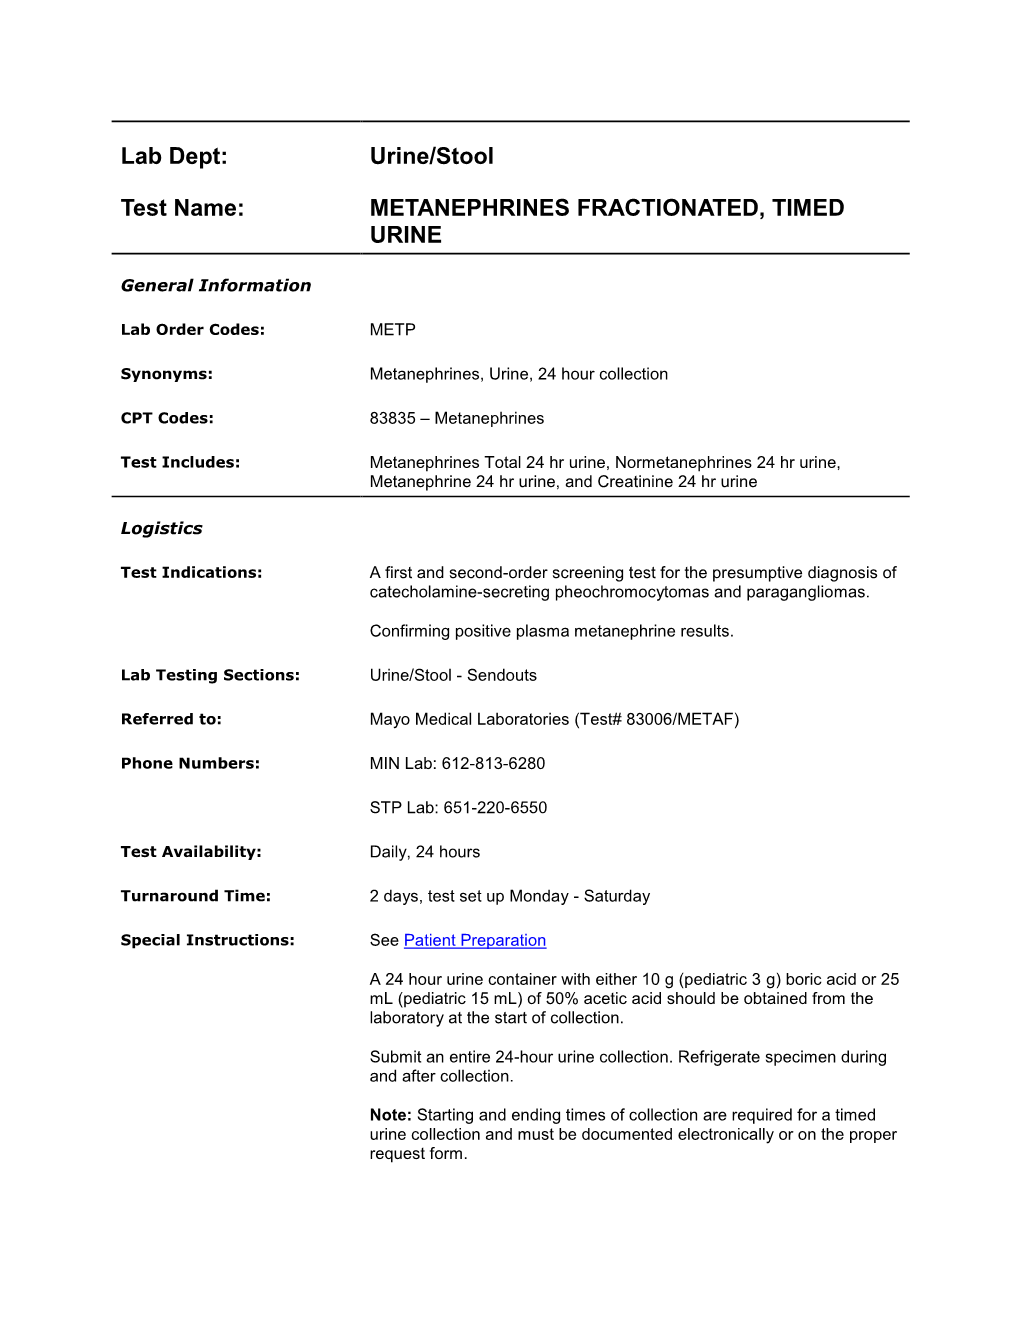 Metanephrines, Fractionated, 24 Hr Urine